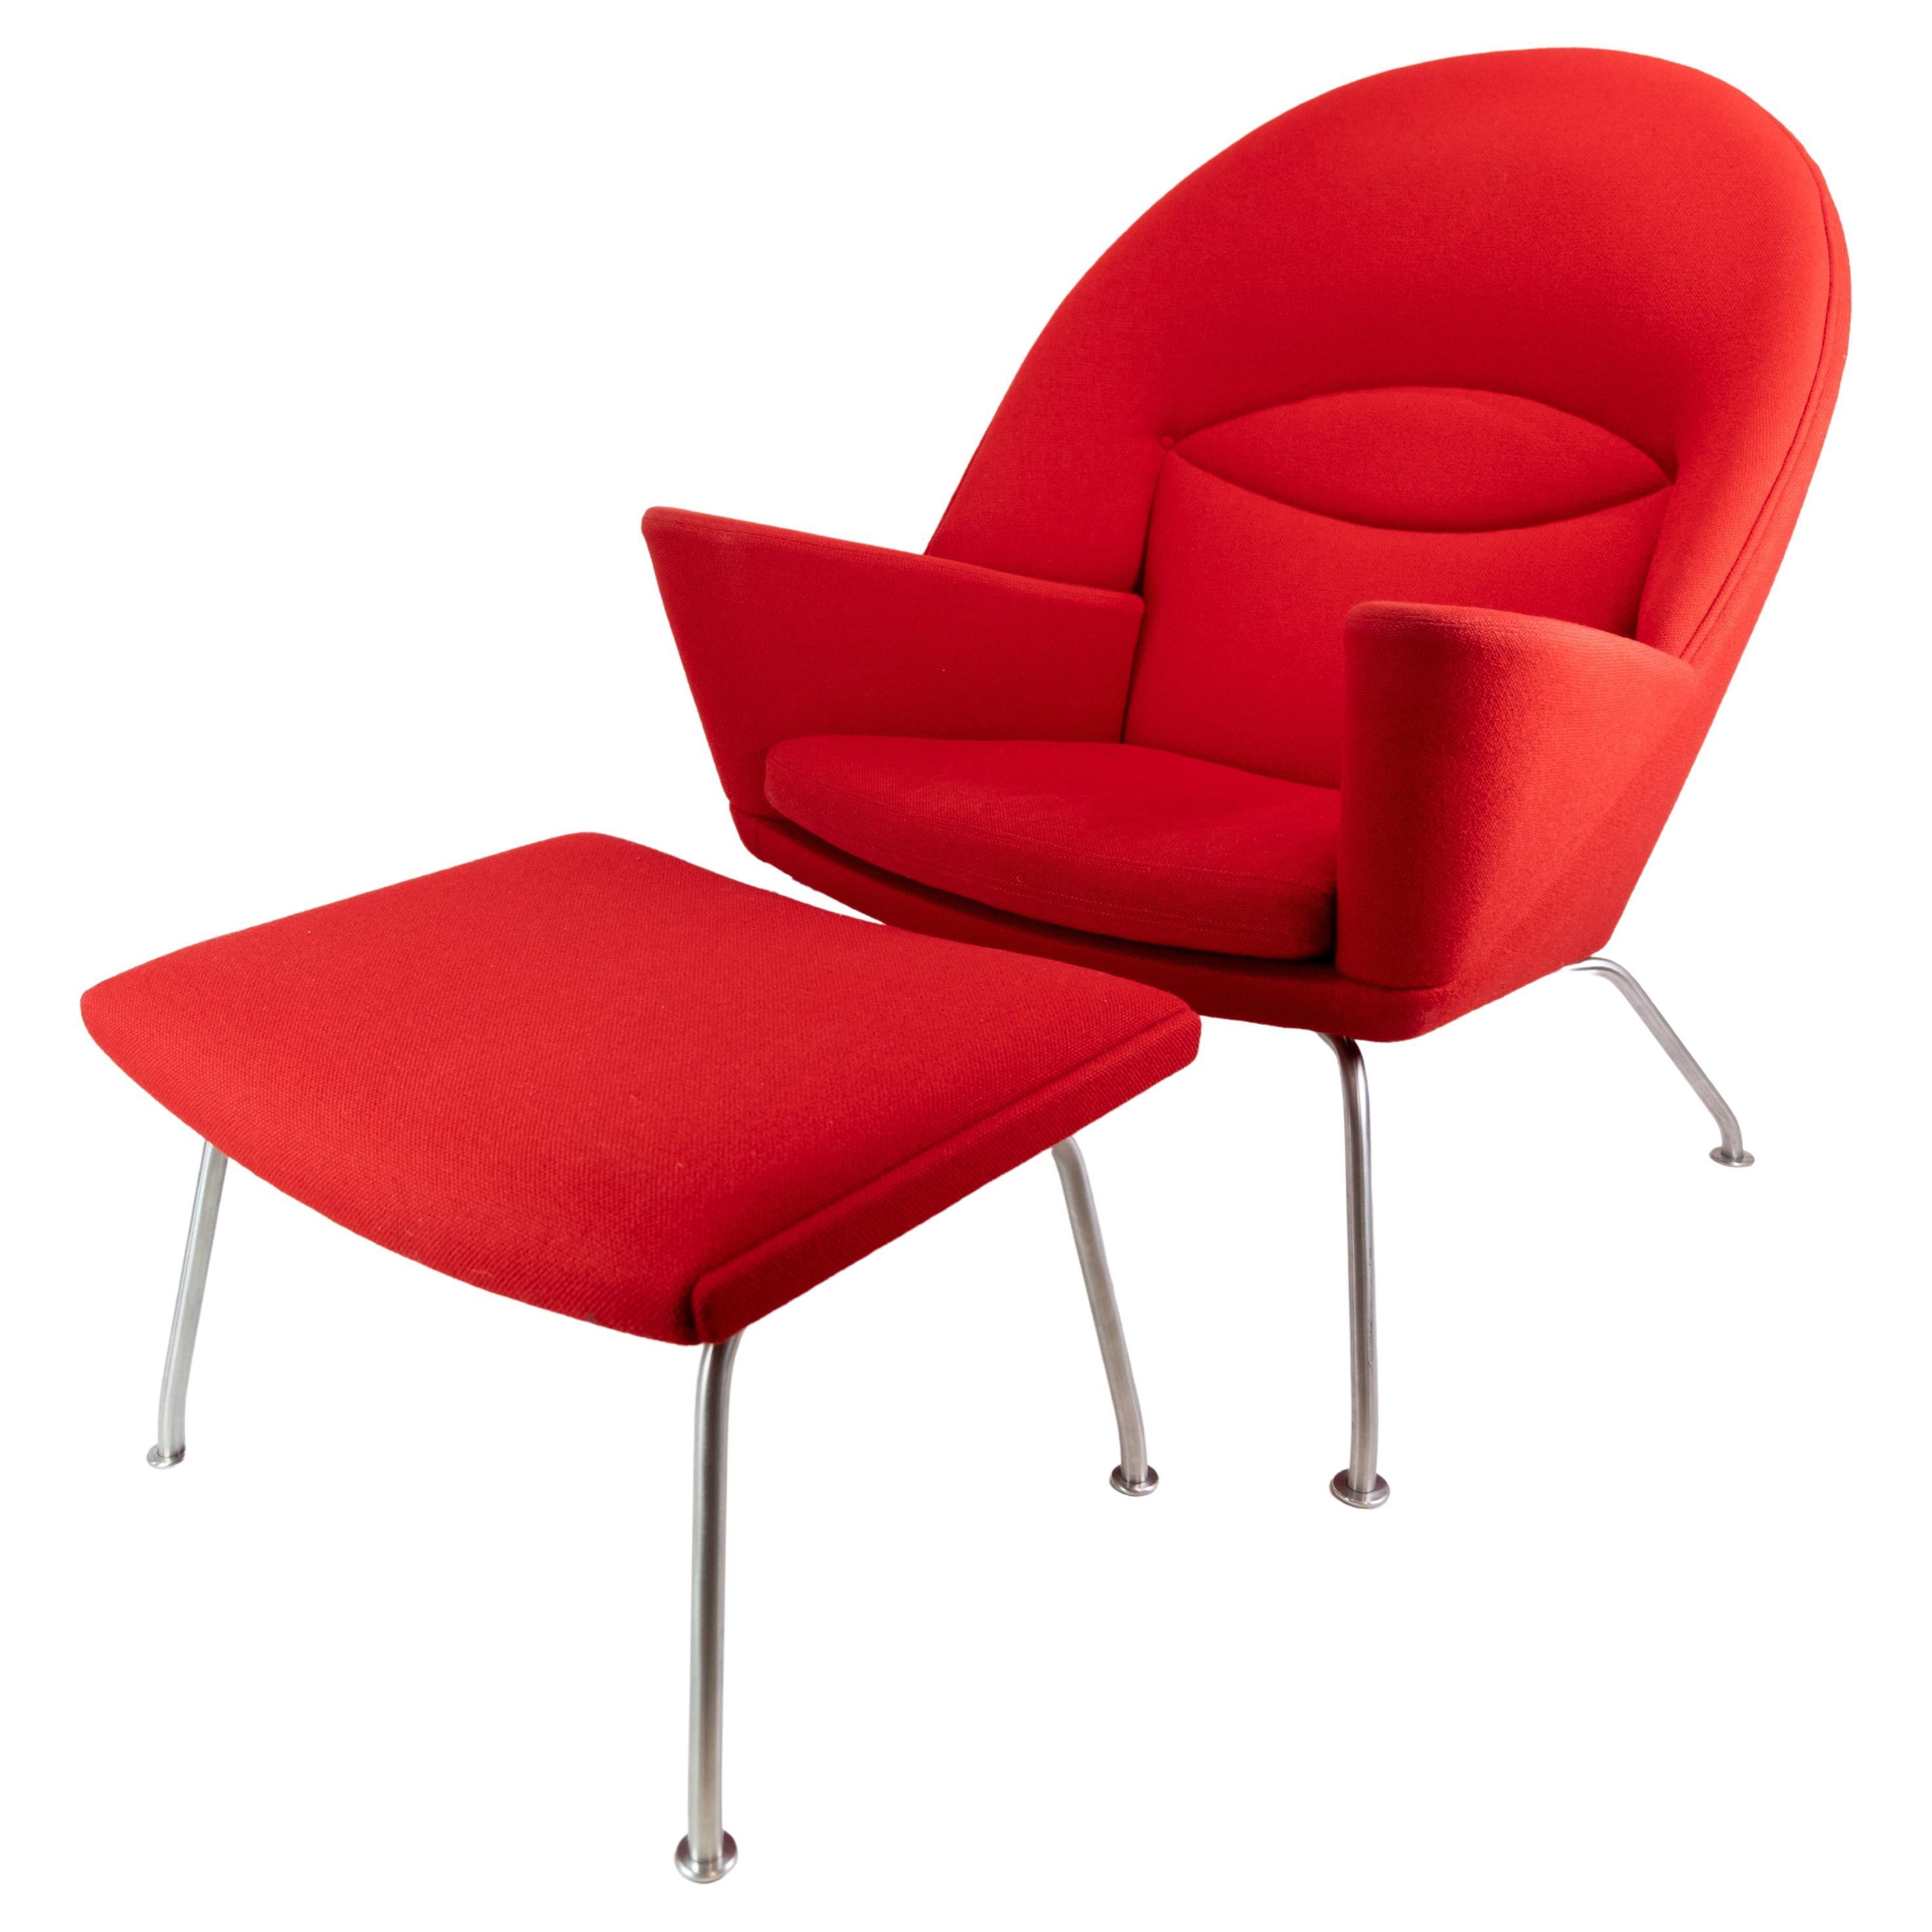 Oculus Chair in Red Hallingdal Fabric Designed By Hans J. Wegner 